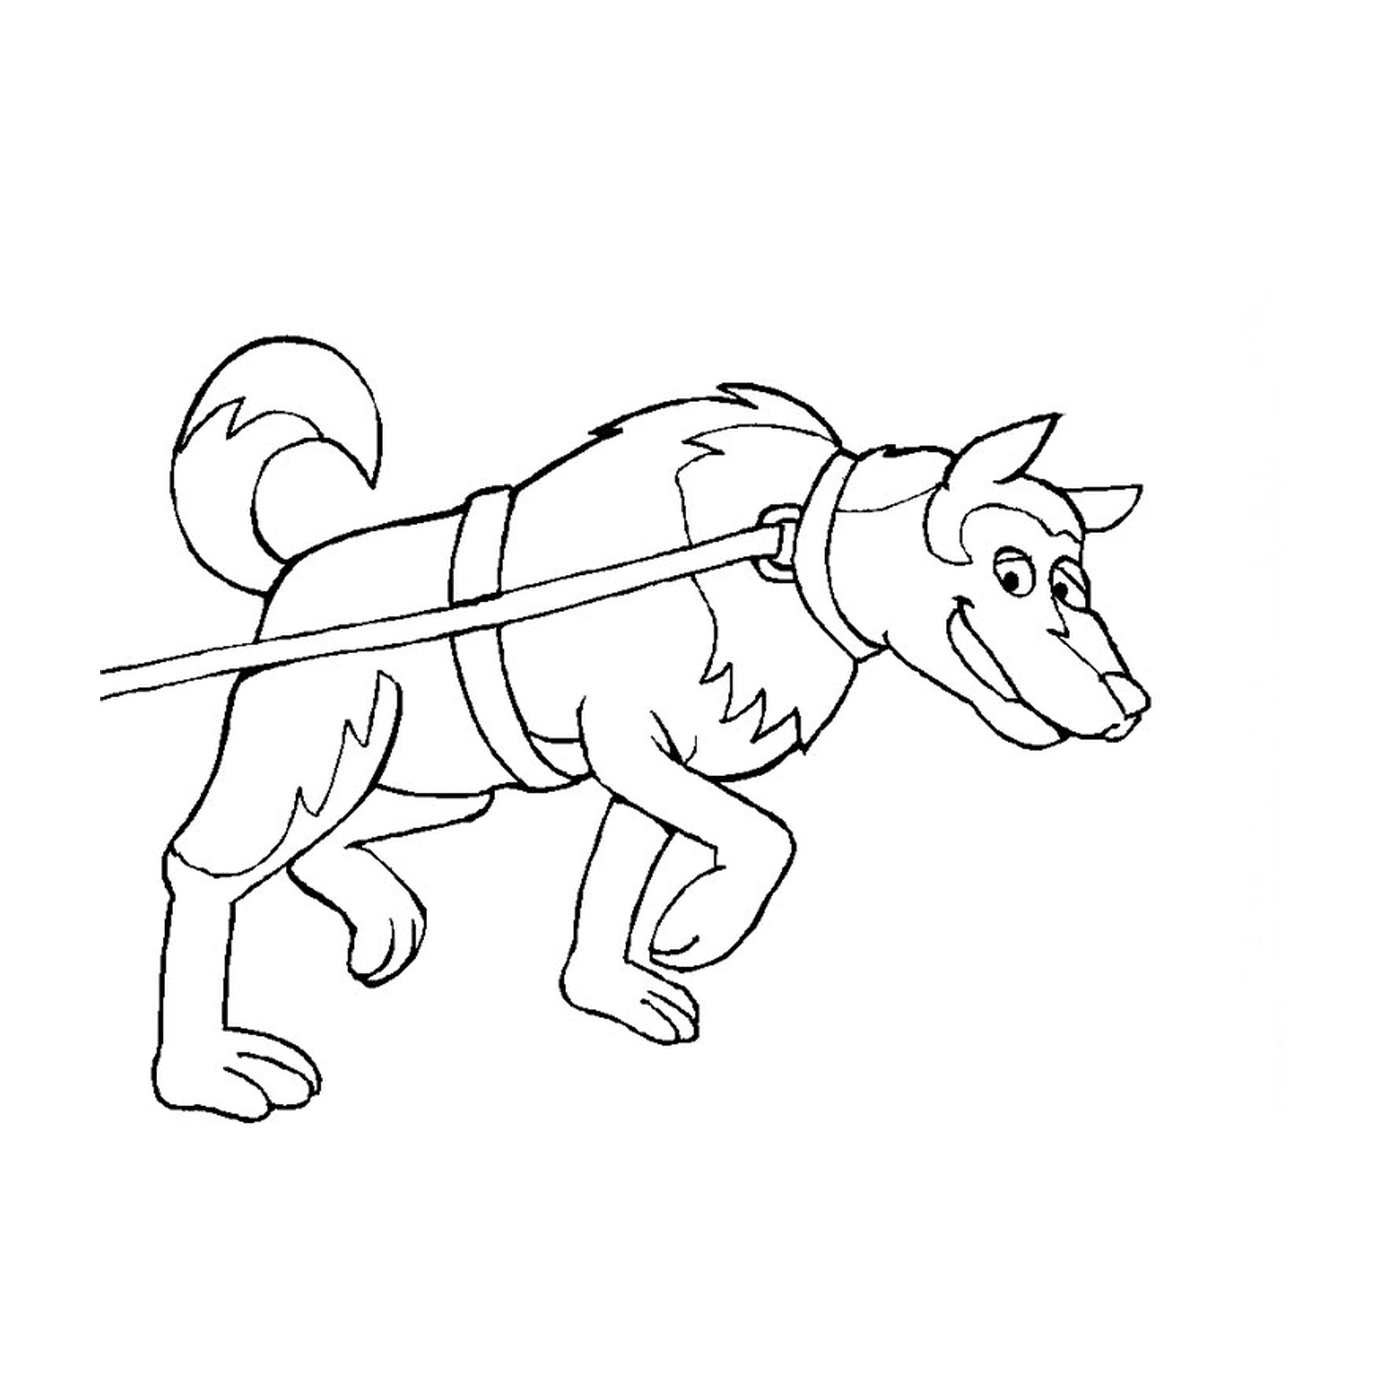  A sled dog on a leash 